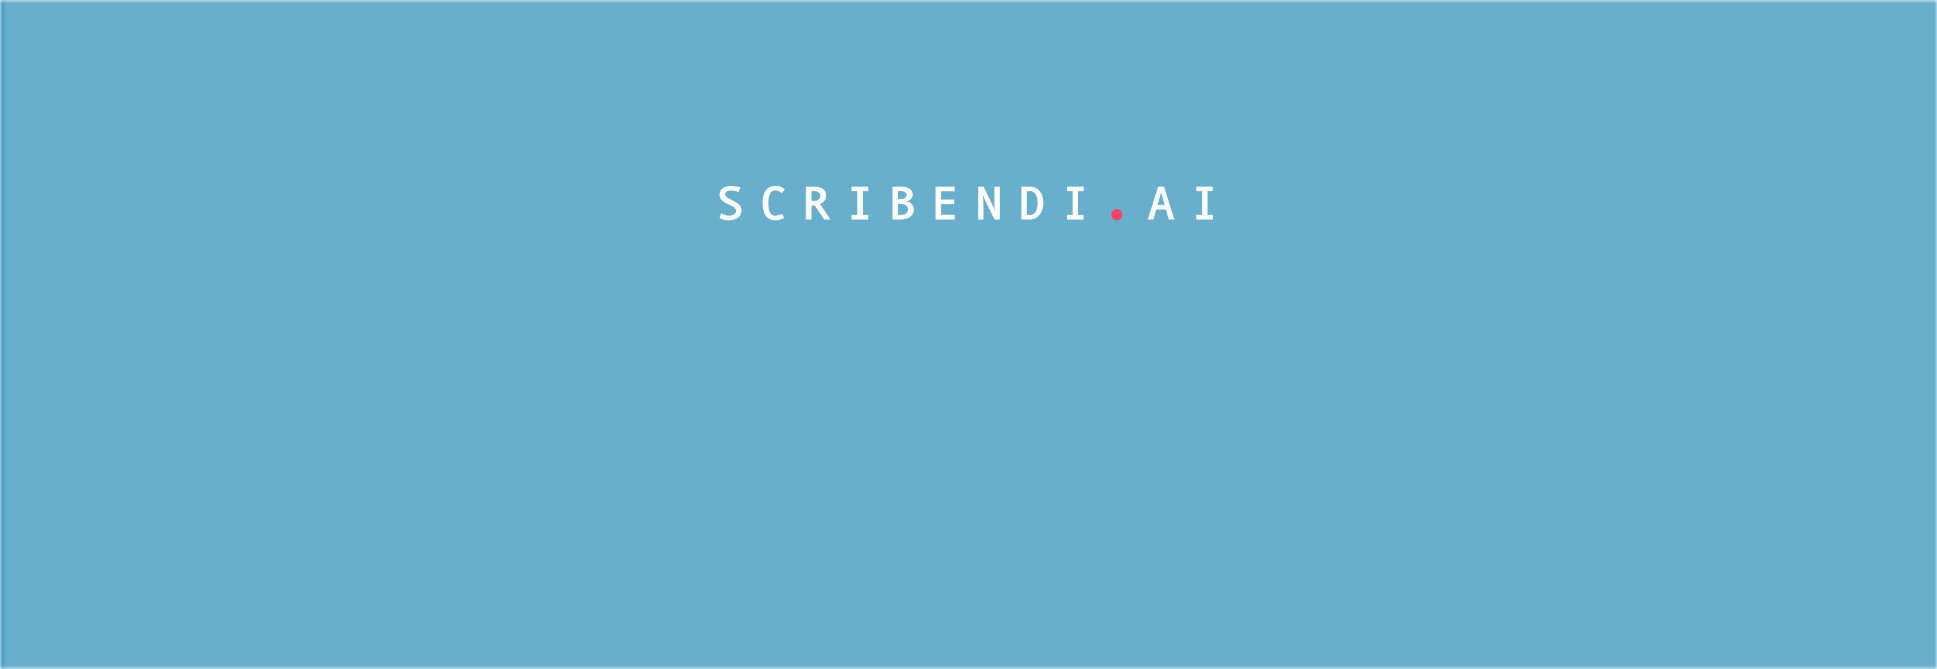 Scribendi Launches Scribendi.ai, Unveiling Artificial Intelligence–Powered Tools